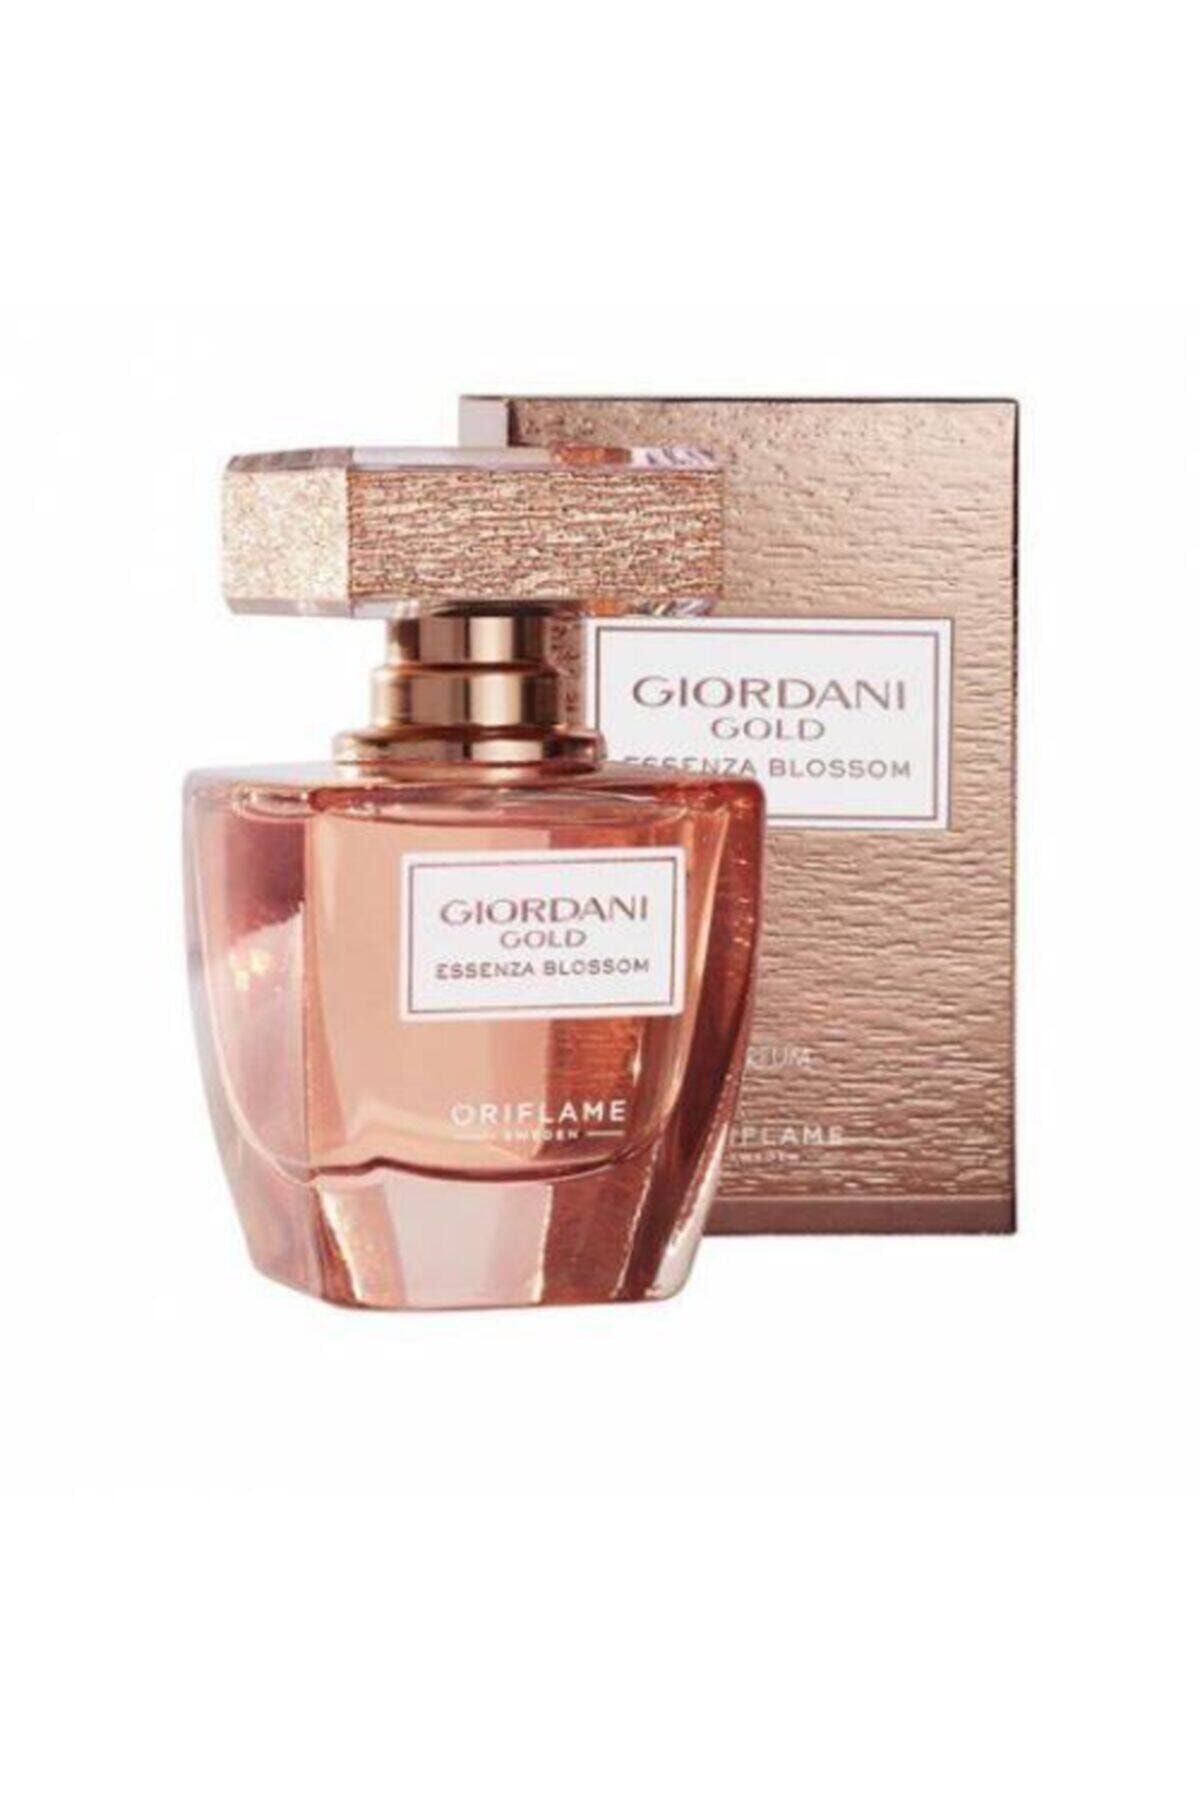 Oriflame Giordani Gold Essenza Blossom Edp 50 ml Parfüm fdgtfh4575